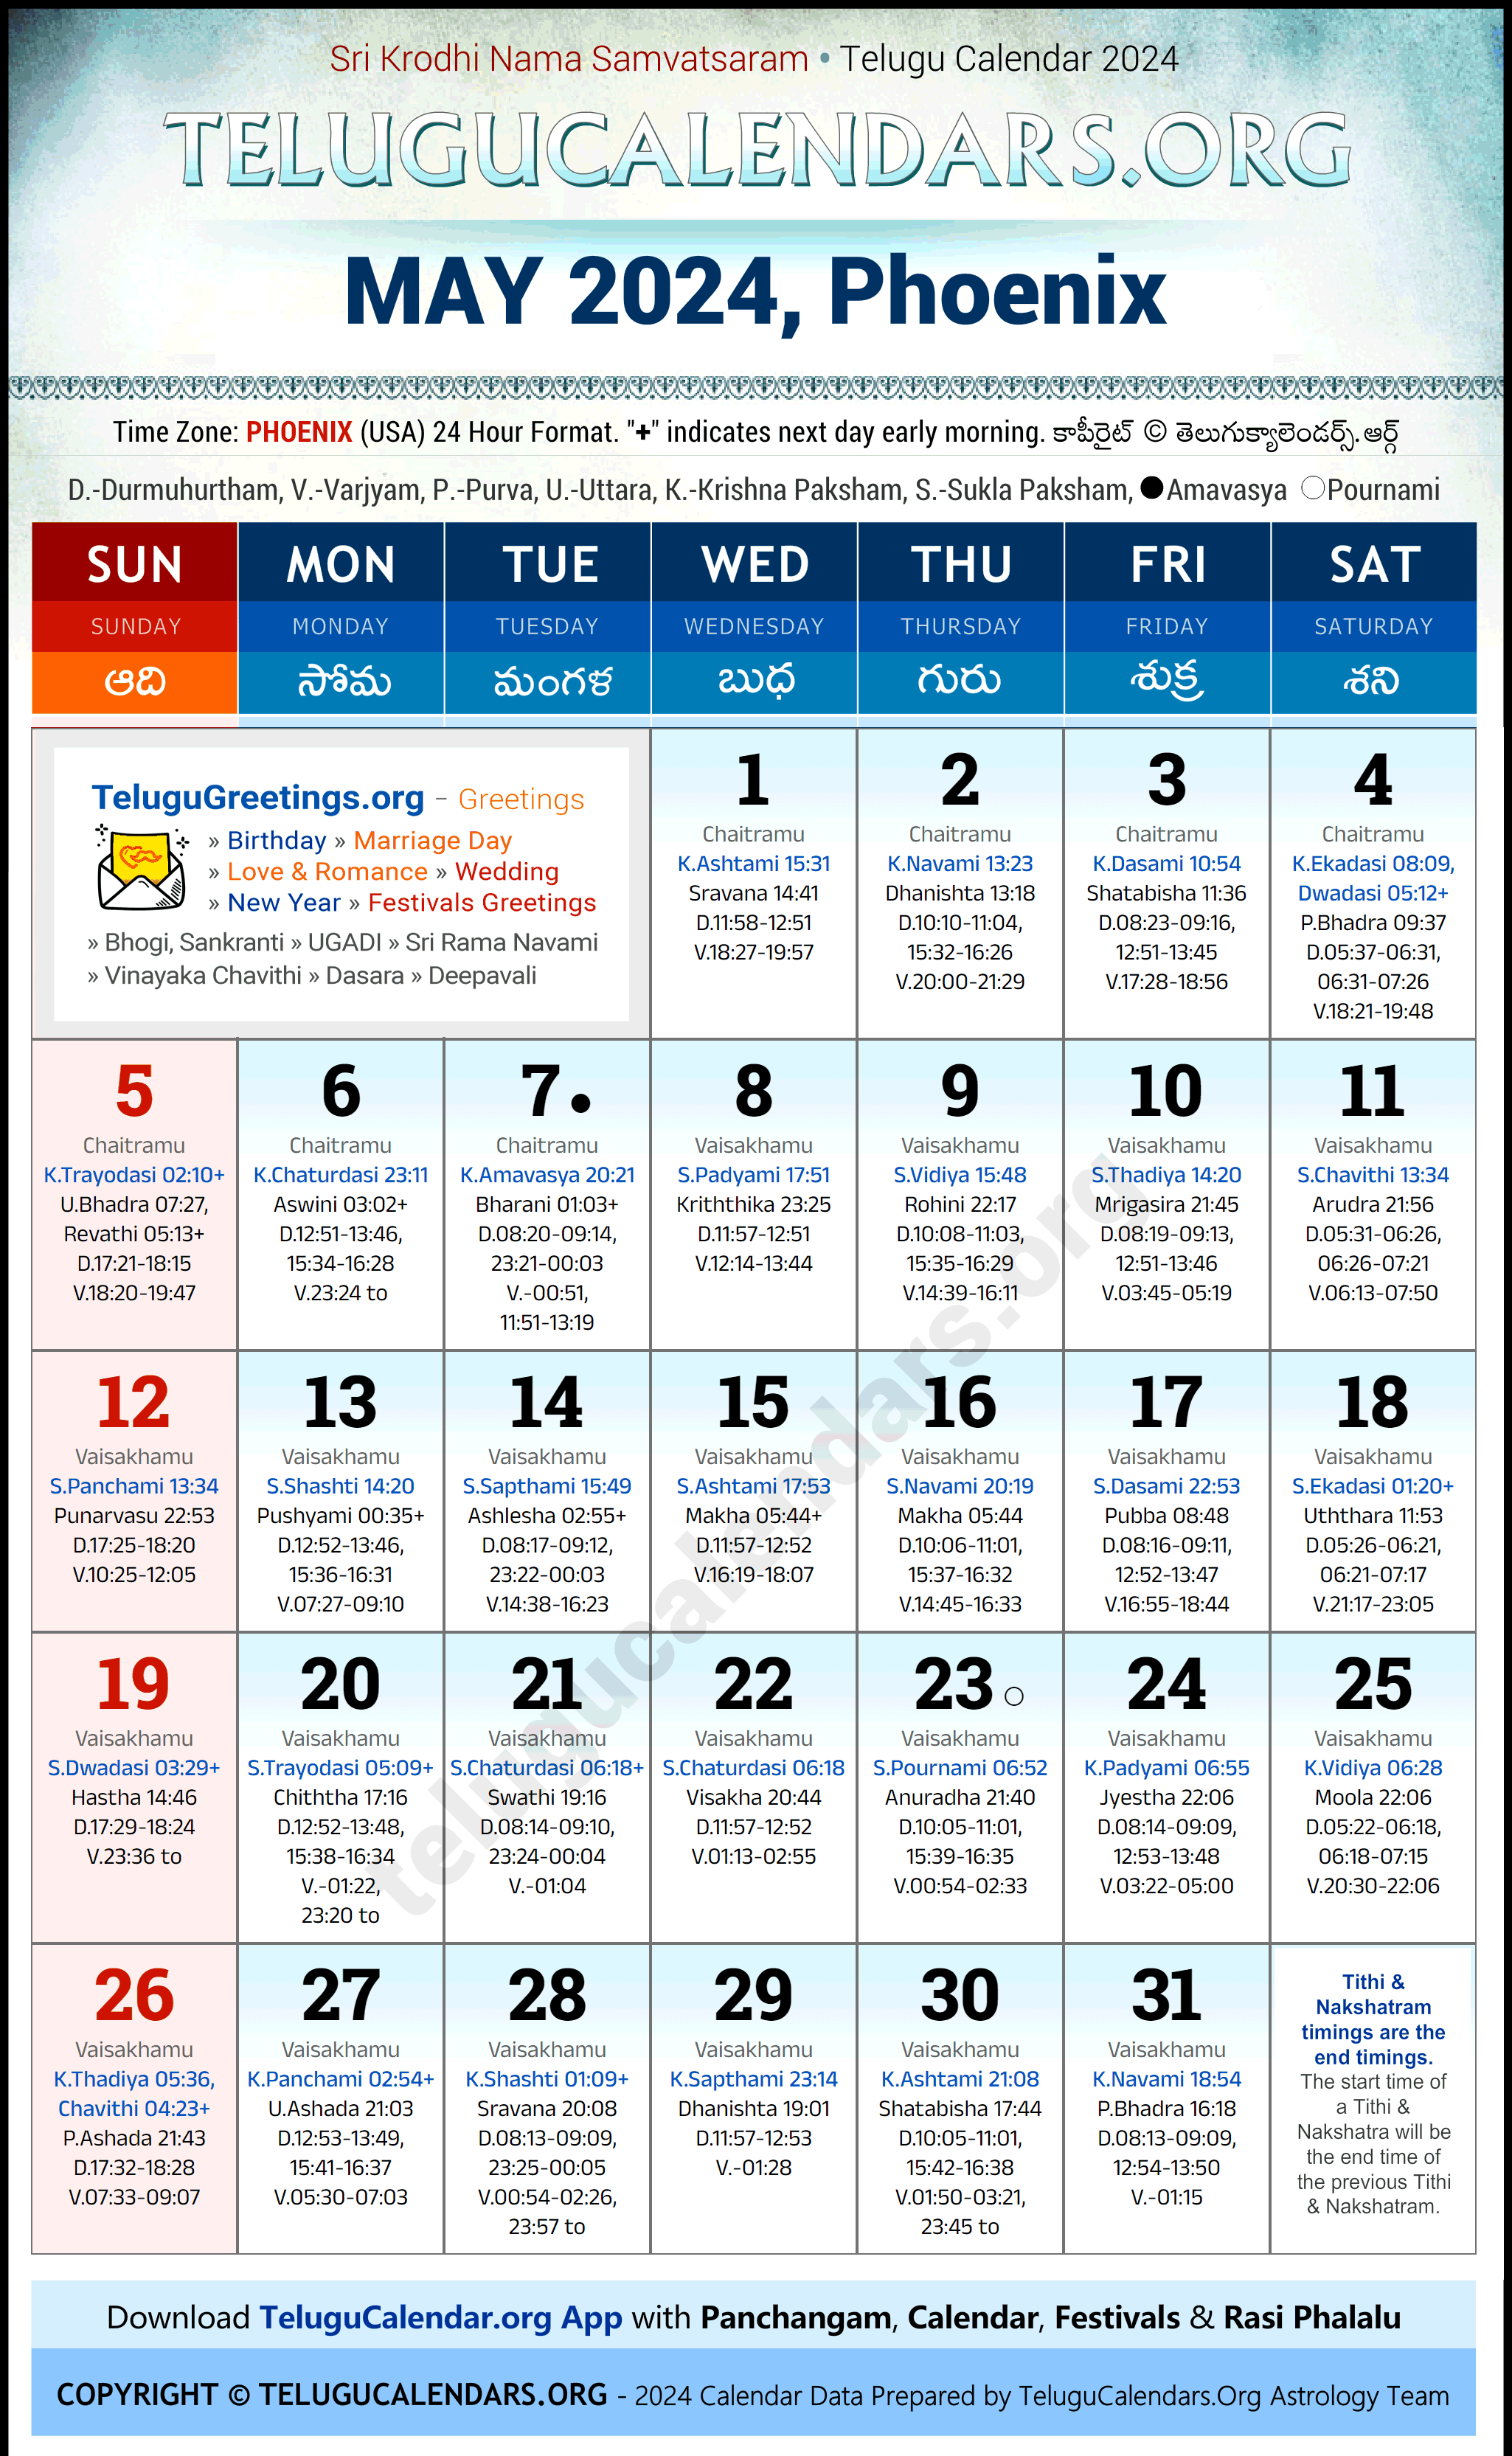 Telugu Calendar 2024 May Festivals for Phoenix